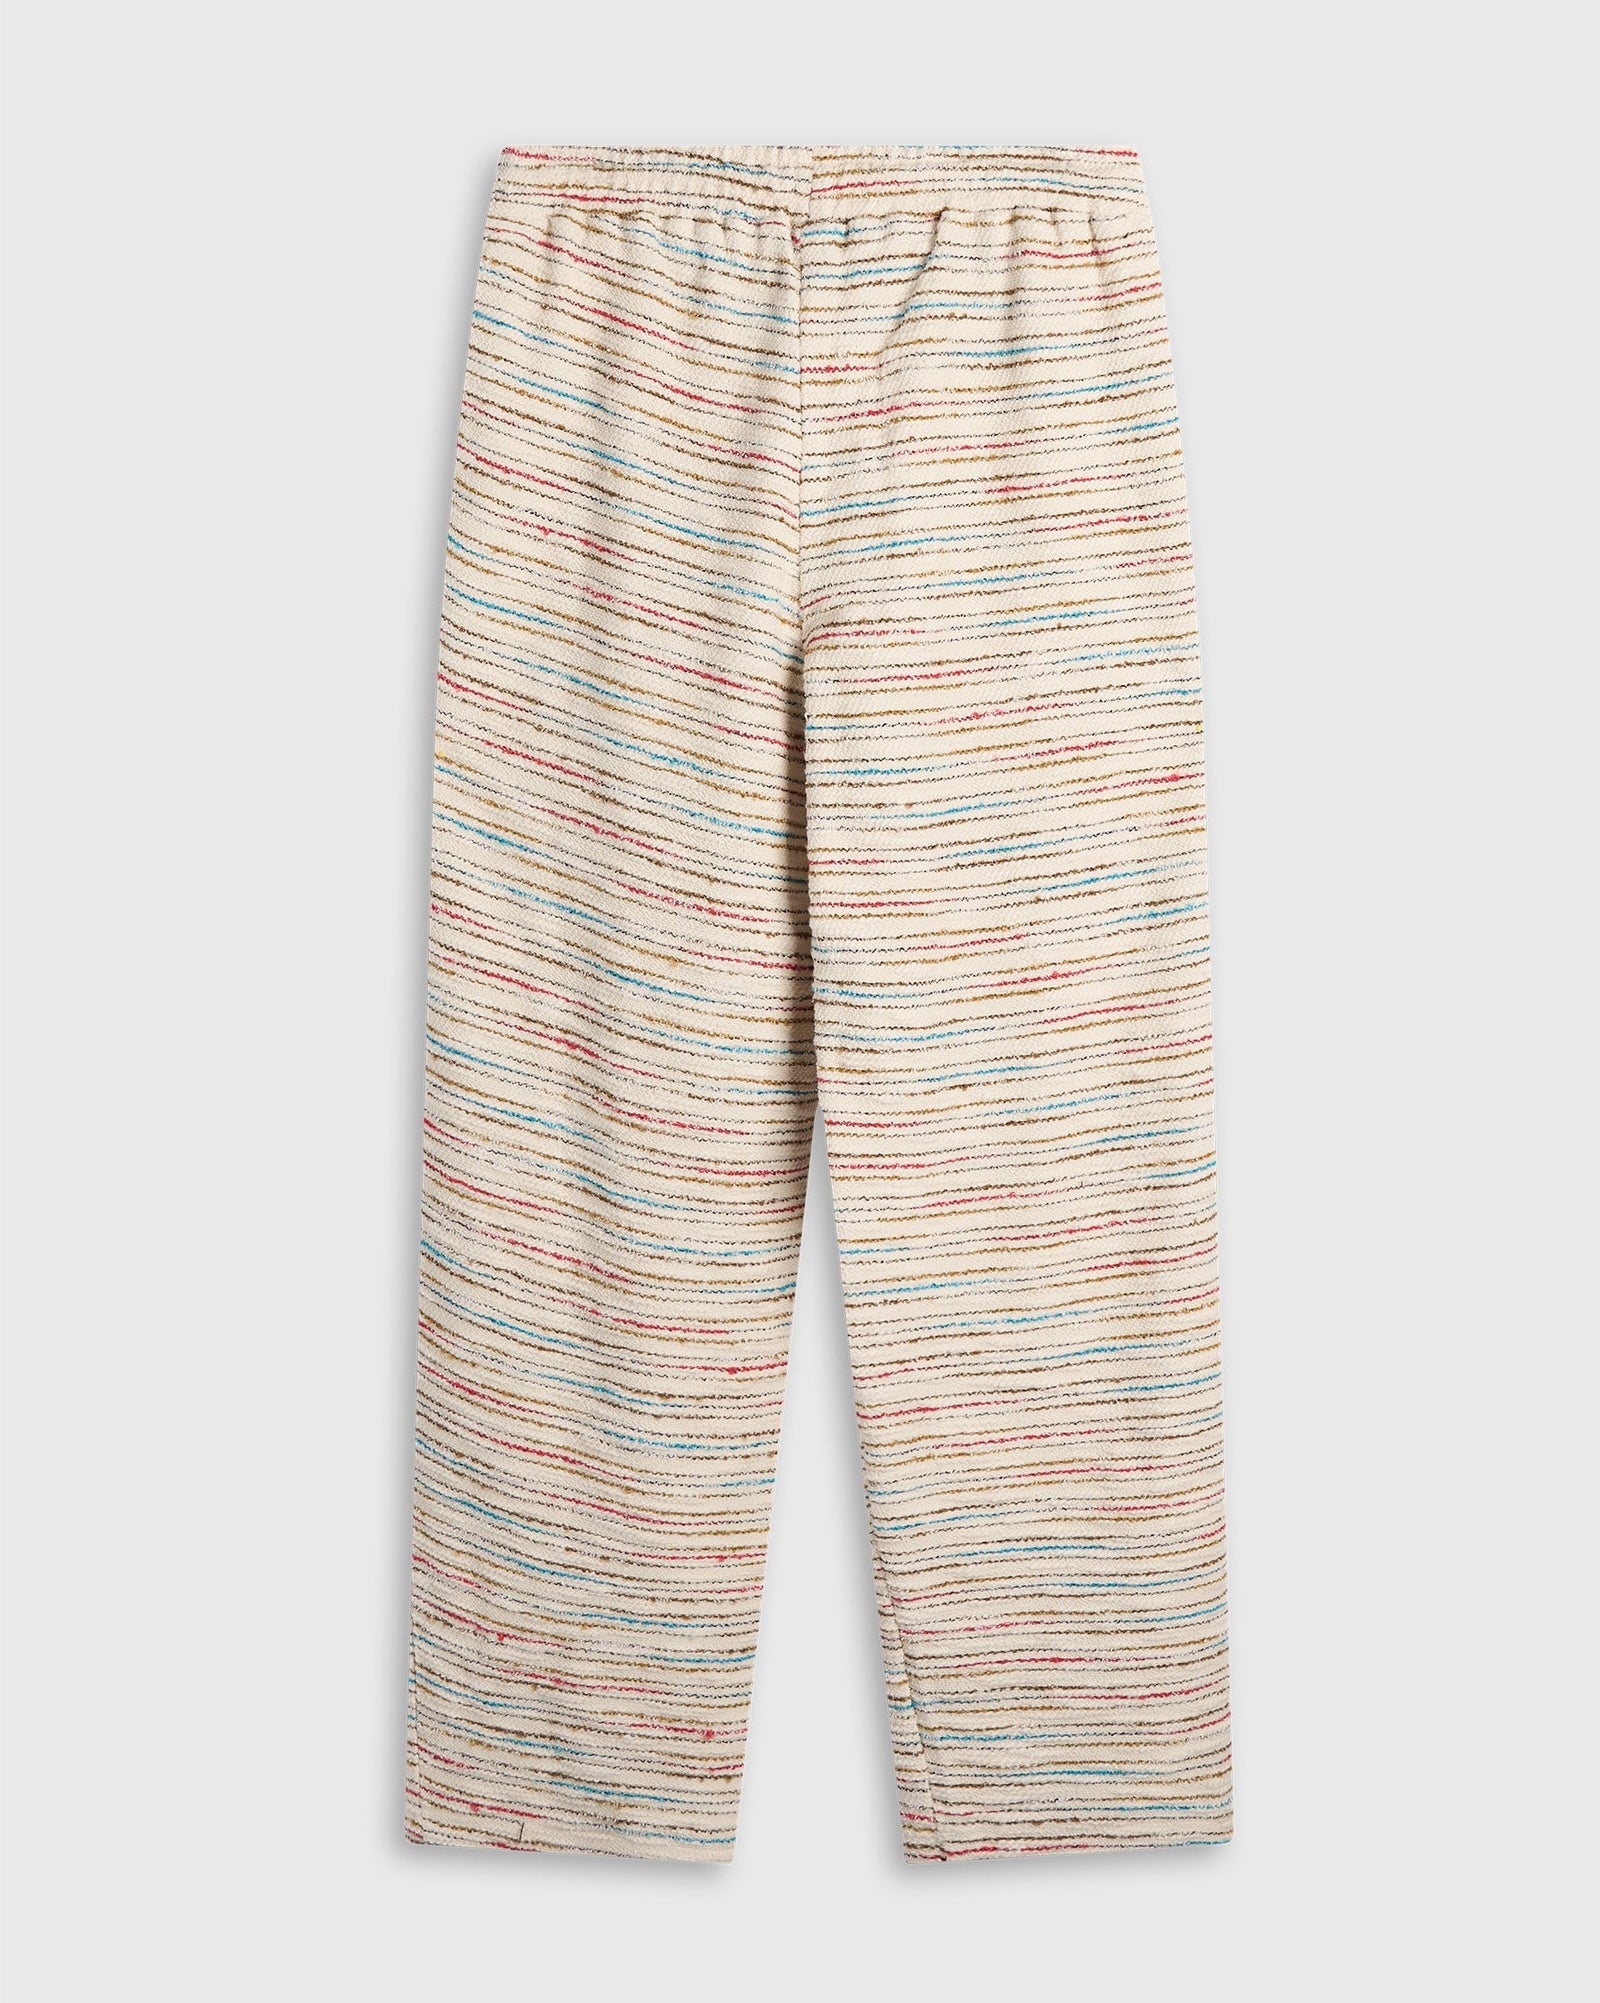 Striped textured straight leg pant- unisex fashion bottoms for men & women by Krost.